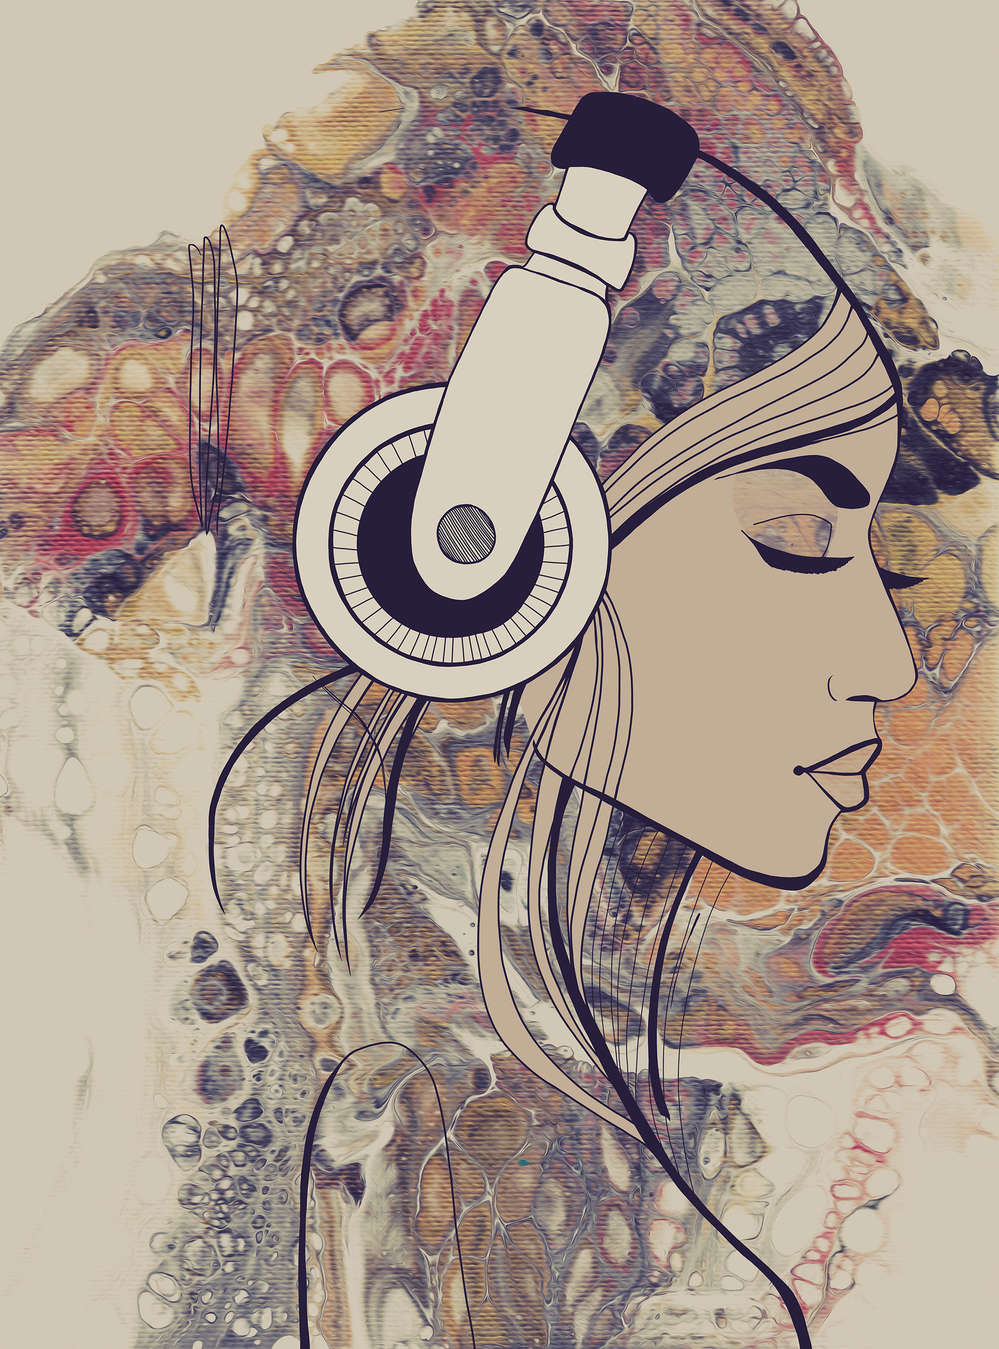             Photo wallpaper acrylic & line art woman figure with headphones
        